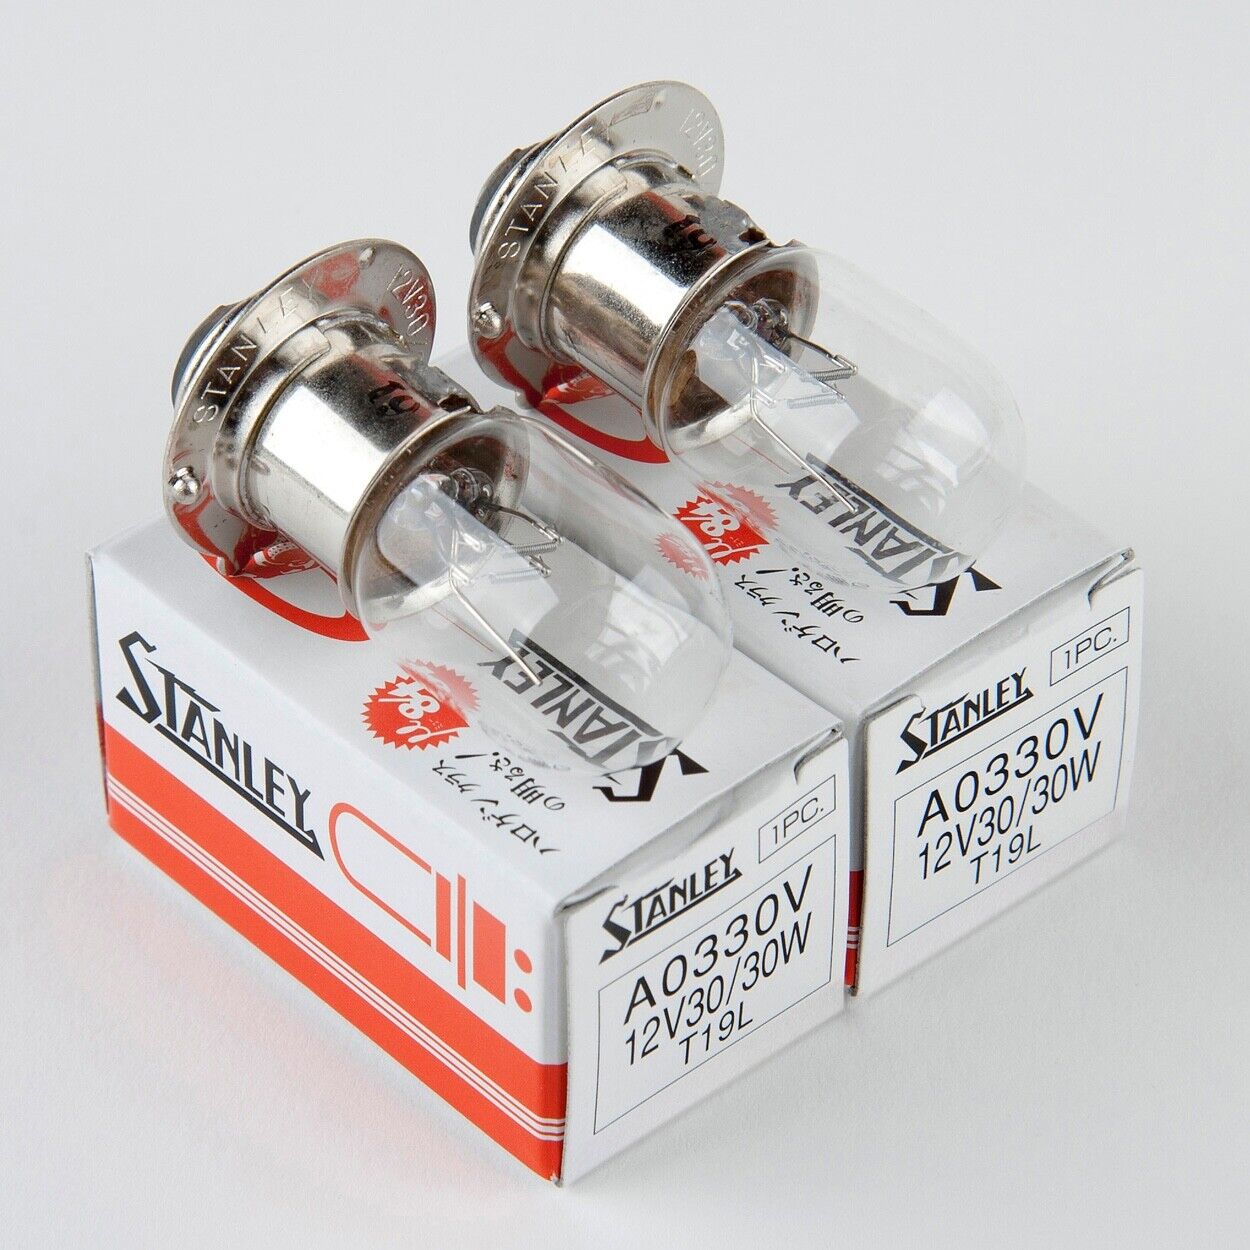 Stanley A0330V 12V 30/30W T19L Clear Auto Bulb, Quantity=2 Bulbs